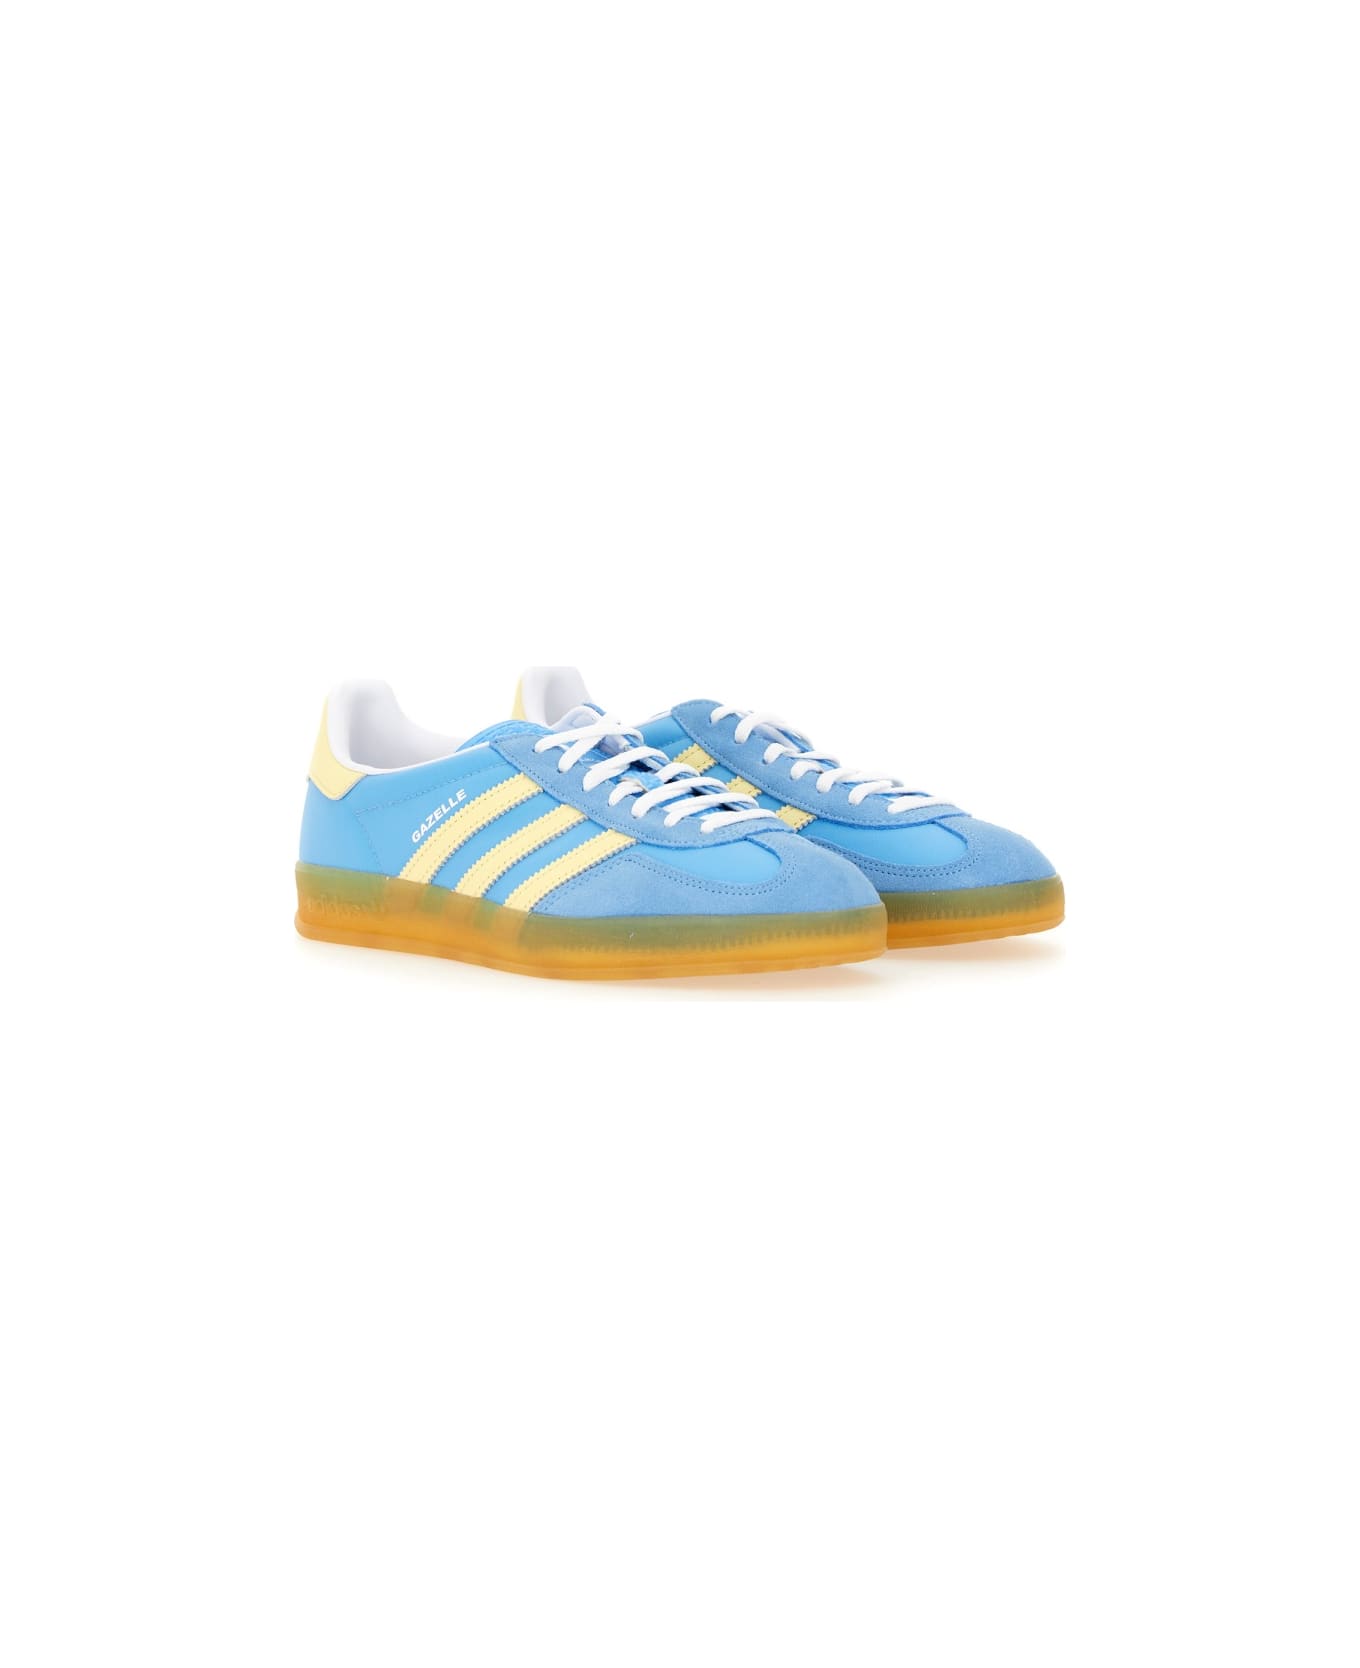 Adidas Originals "gazelle" Sneaker - BABY BLUE